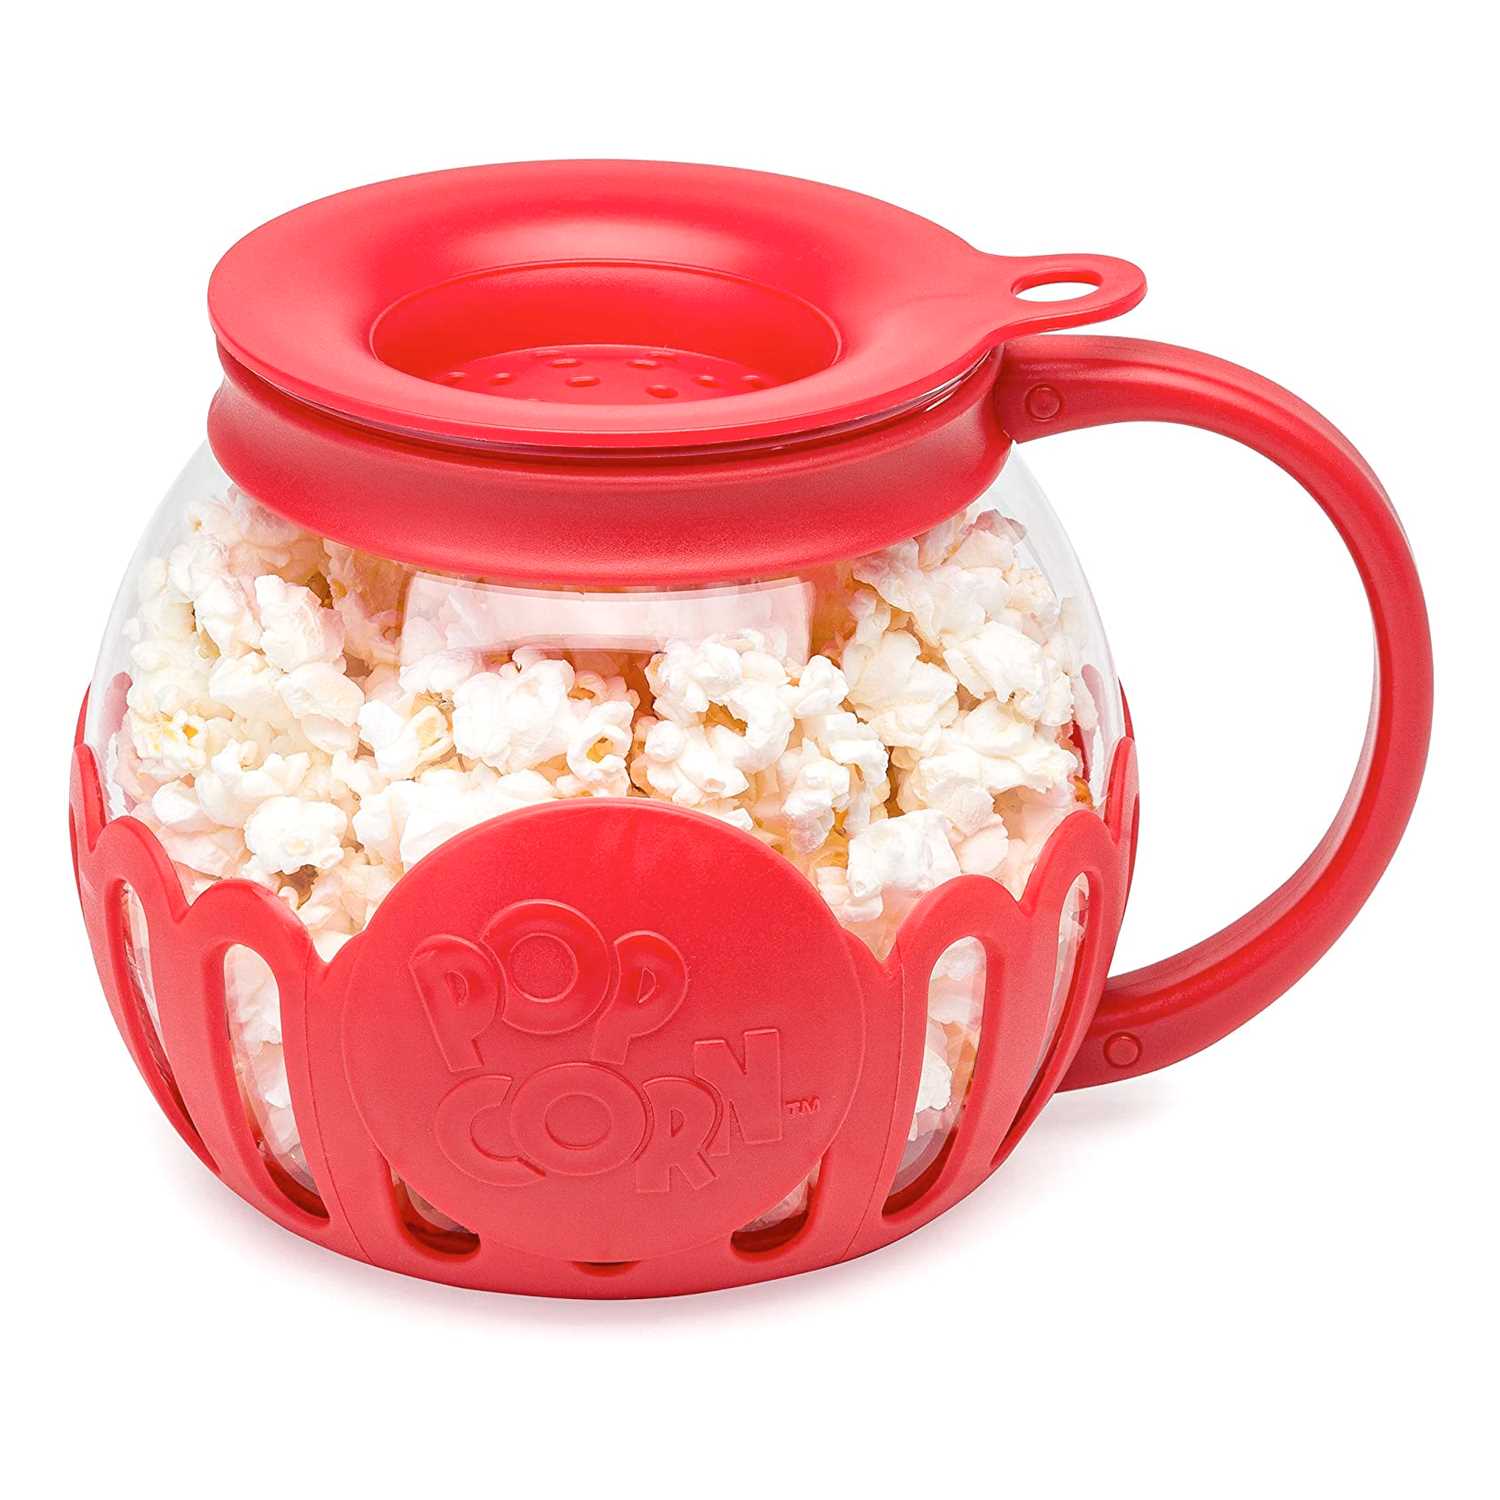 Micro-Pop Microwave Hot Air Popcorn Maker Main Image - Creative Anniversary Presents For Him